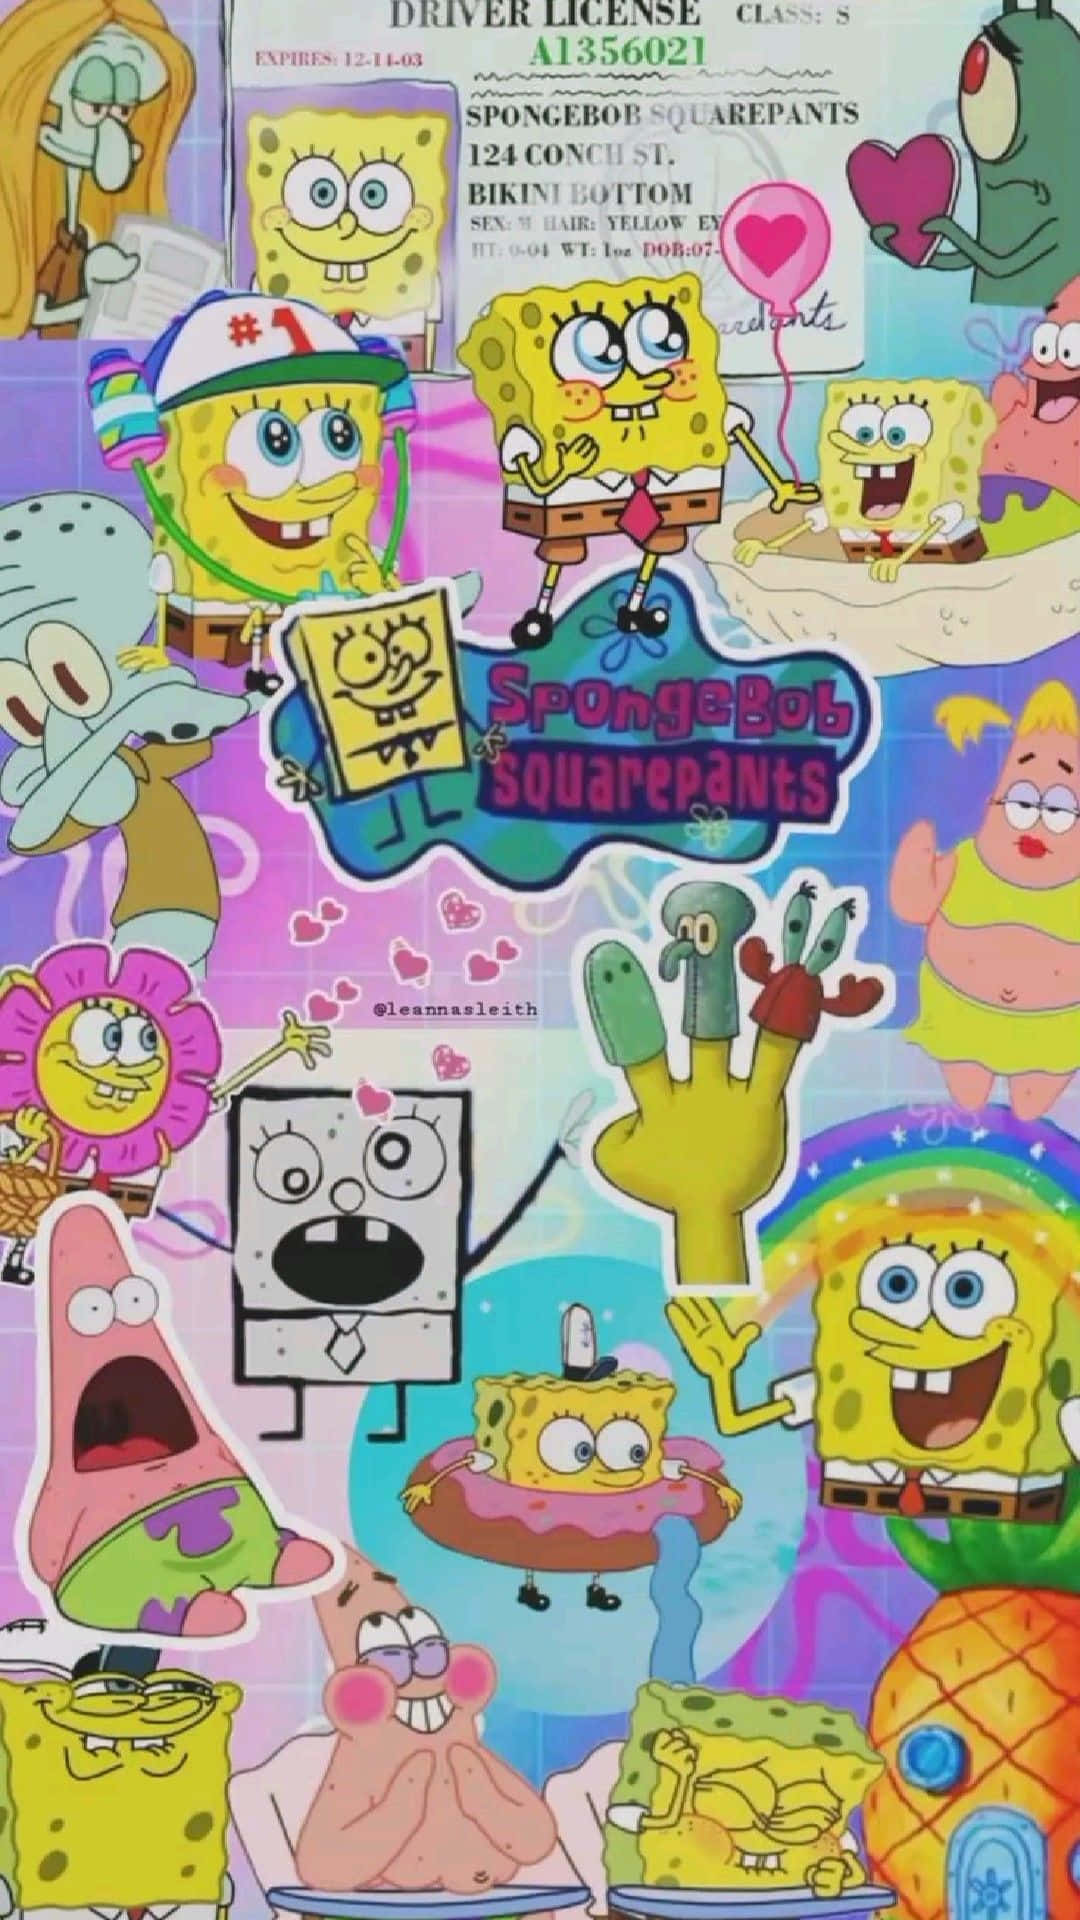 "The Aesthetic Universe of Spongebob Squarepants"